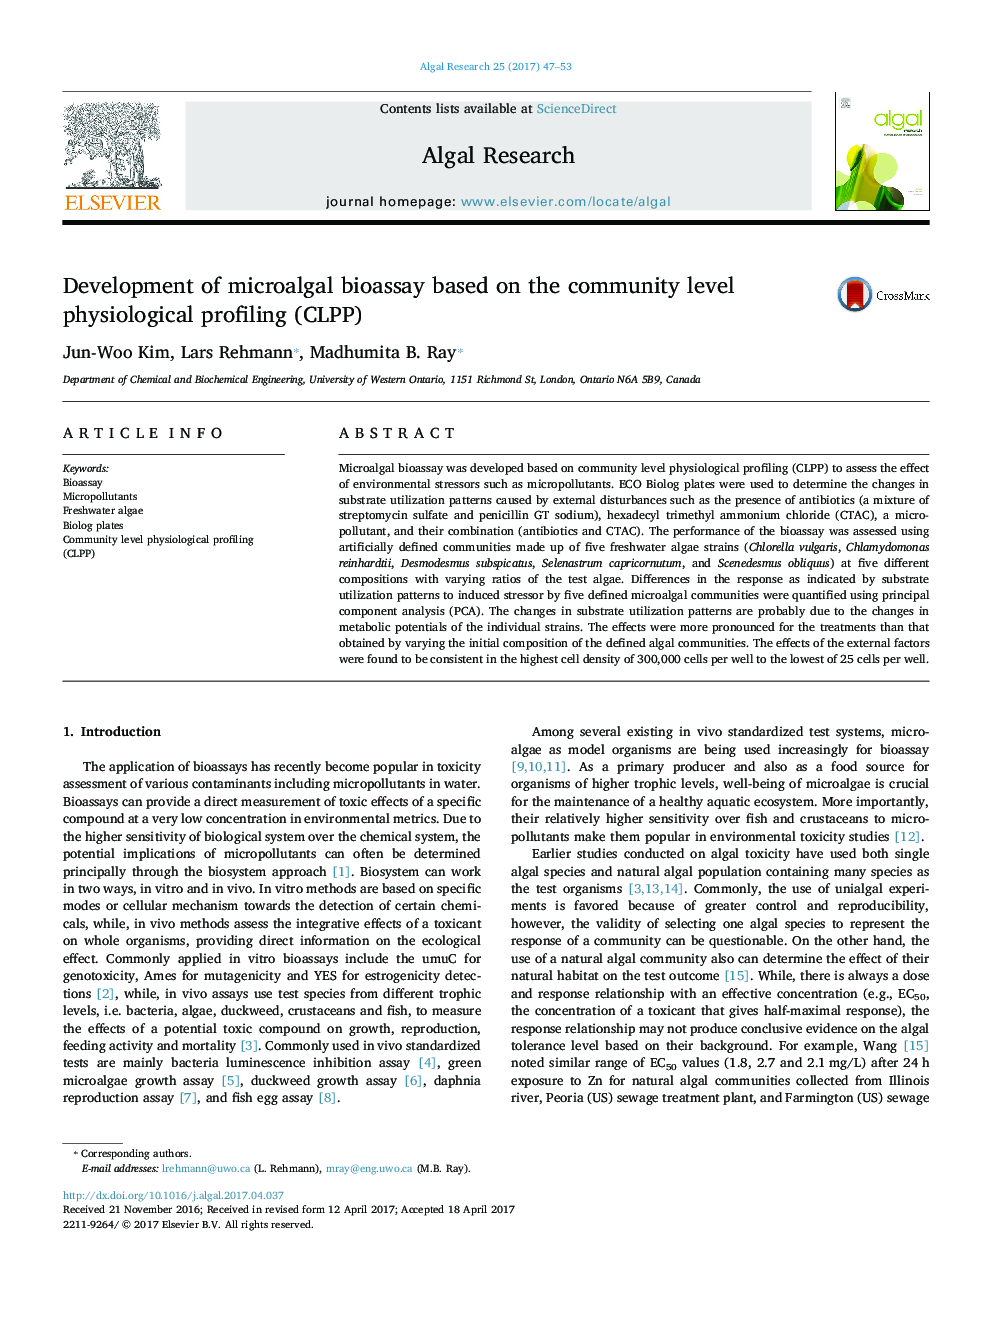 Development of microalgal bioassay based on the community level physiological profiling (CLPP)